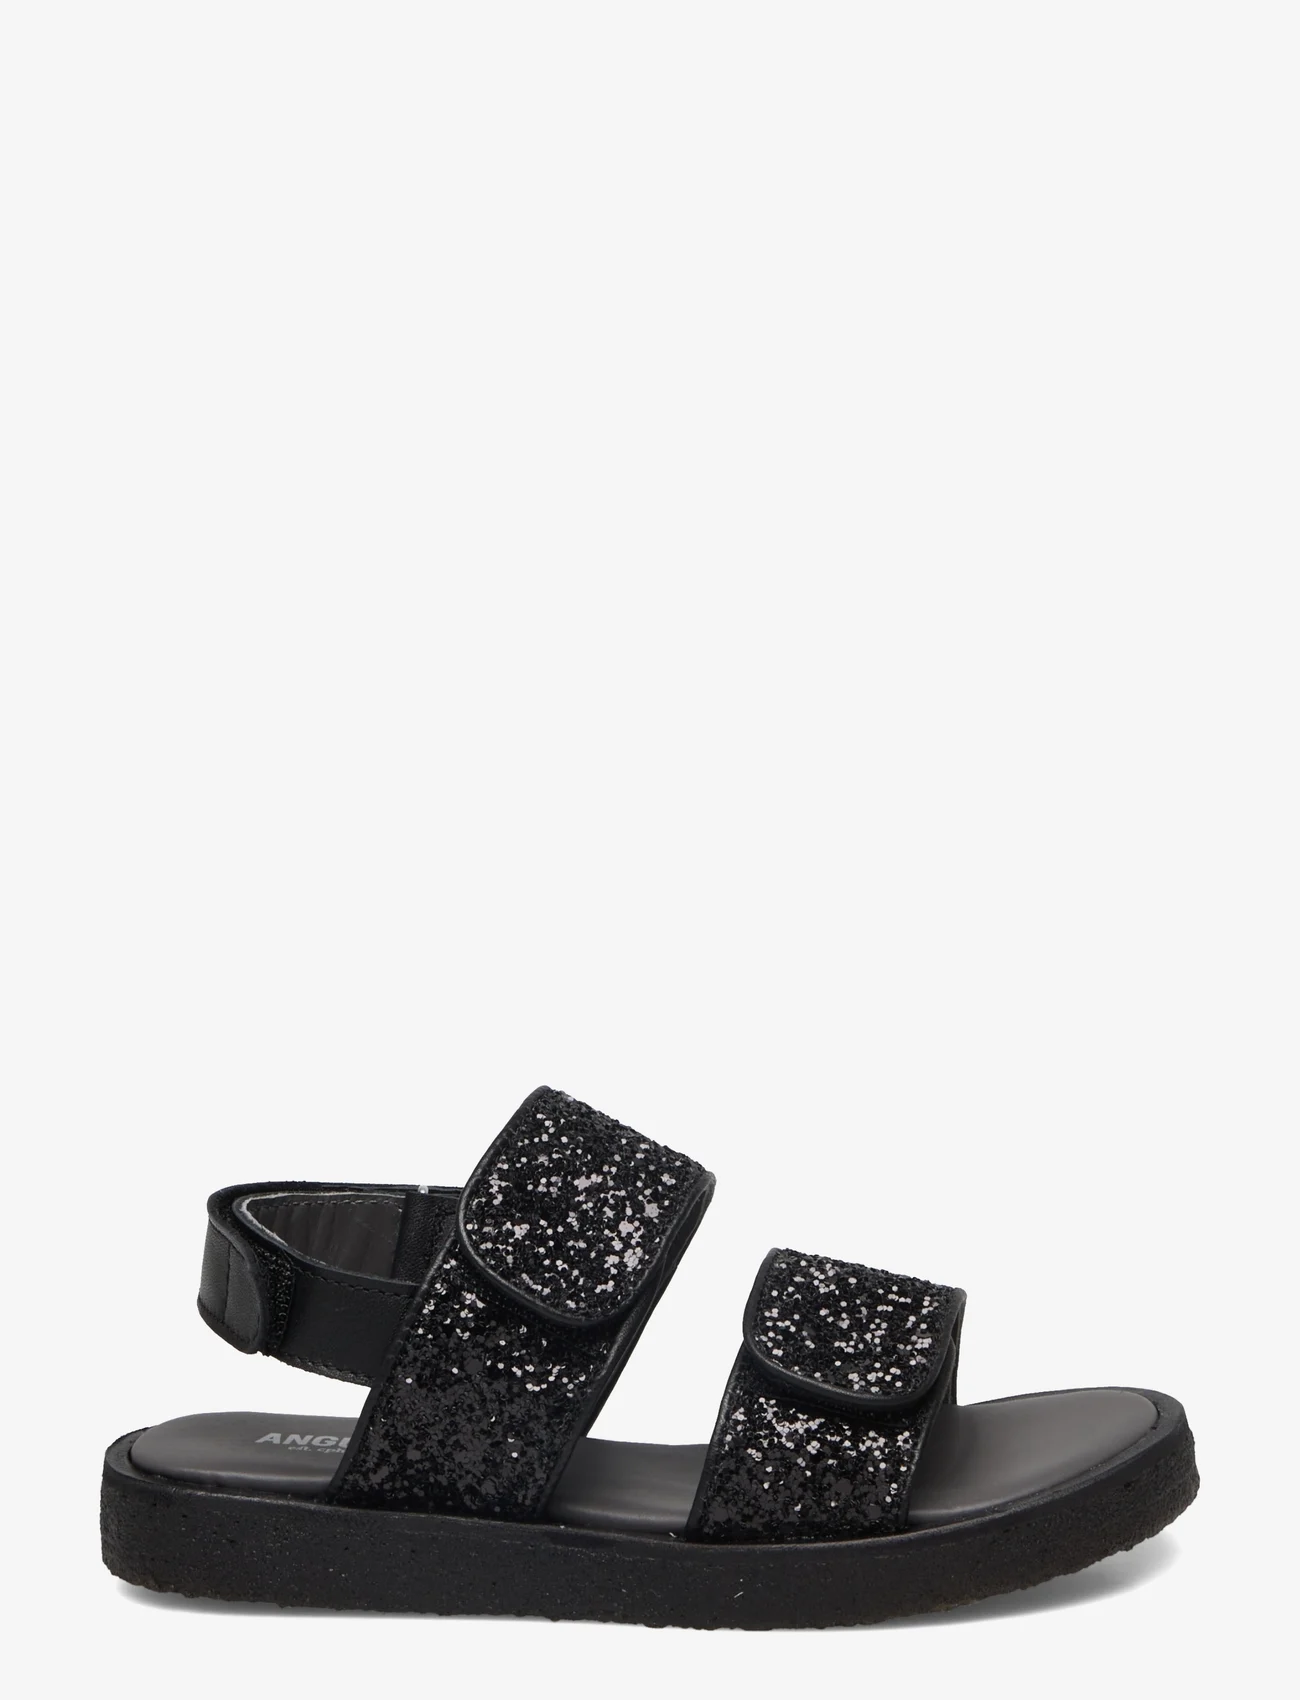 ANGULUS - Sandals - flat - open toe - op - sommerkupp - 1604/2486 black/black glitter - 1